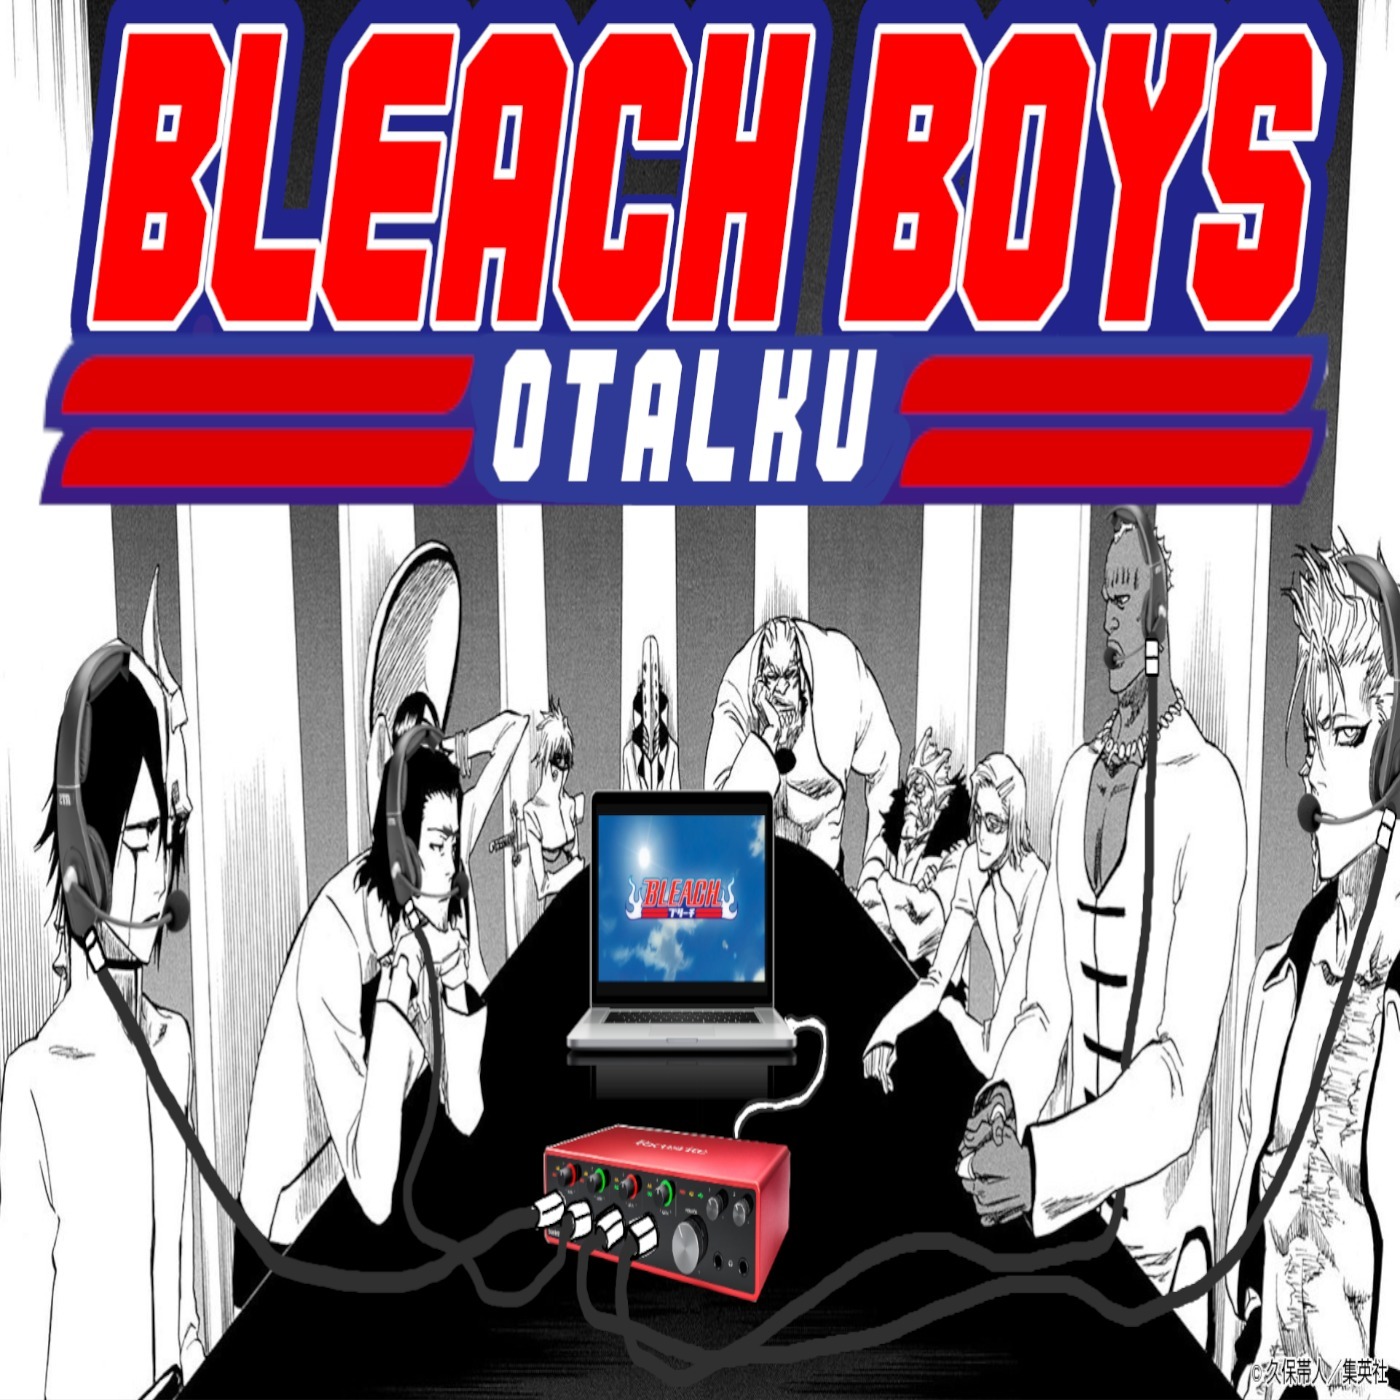 Bleach Boys Redcircle